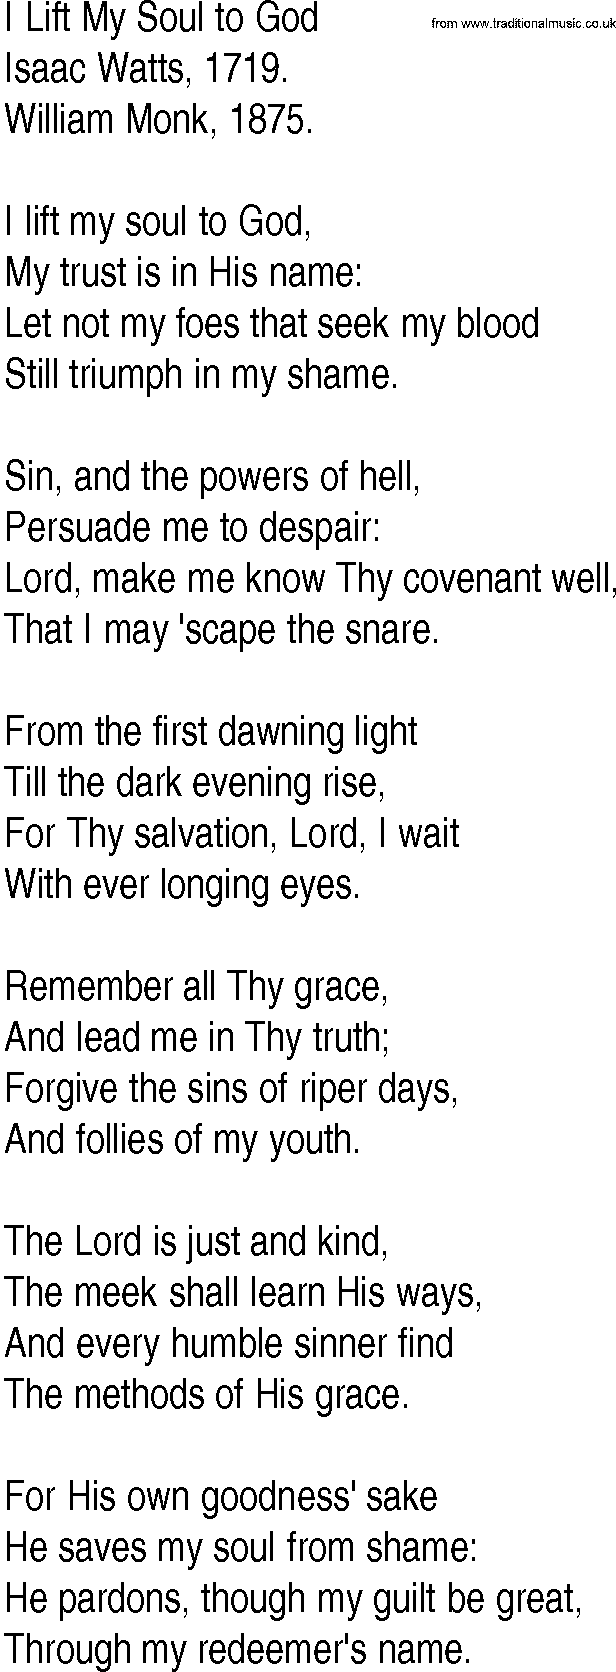 Hymn and Gospel Song: I Lift My Soul to God by Isaac Watts lyrics